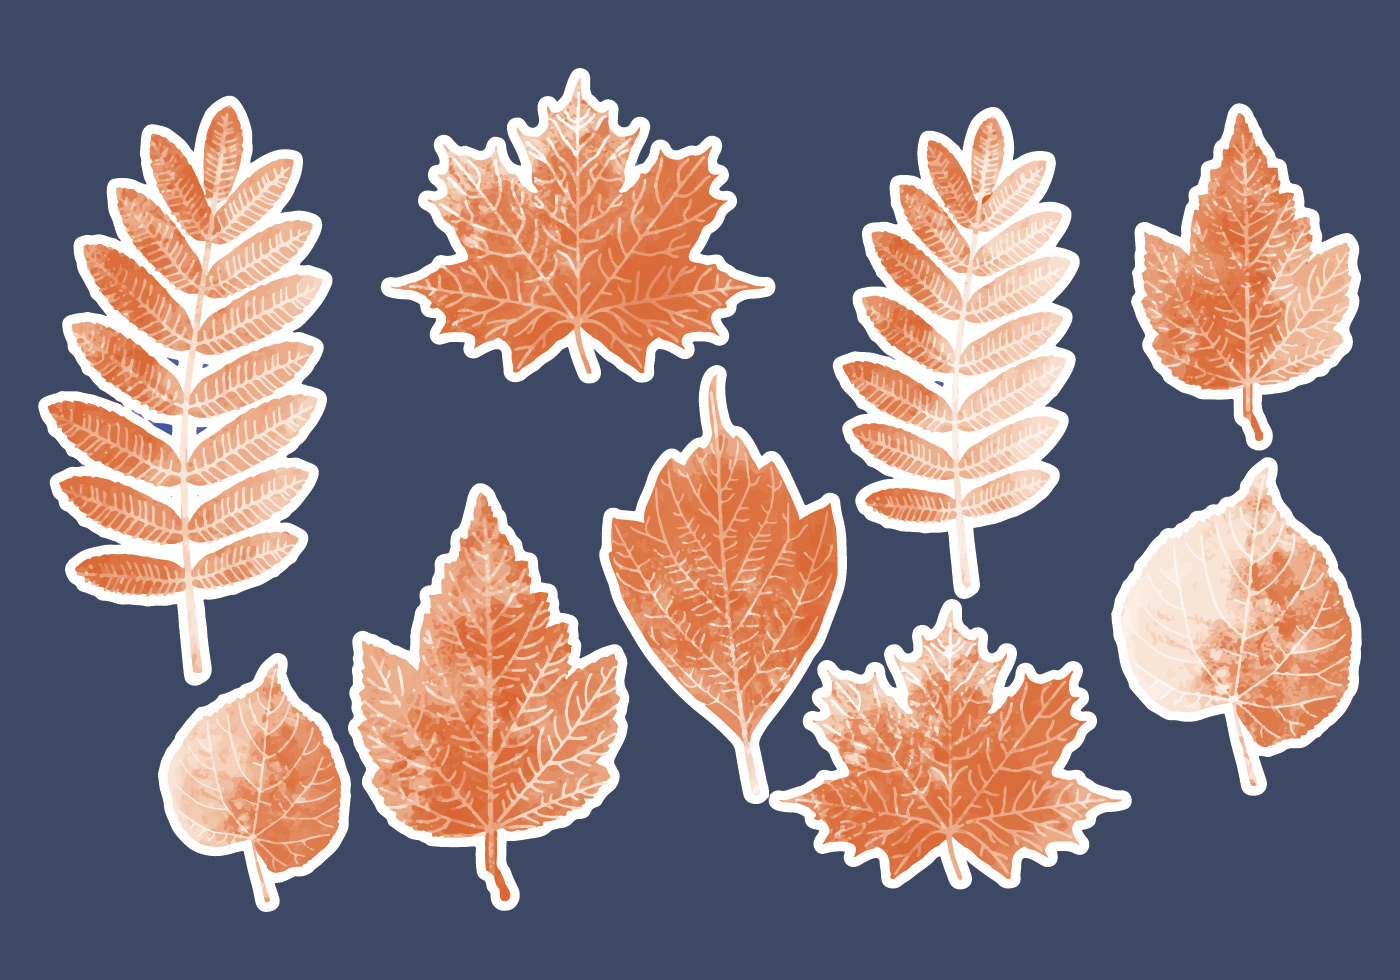 Leaves collection. Истья коллекция в векторе. Oak leaves frame.